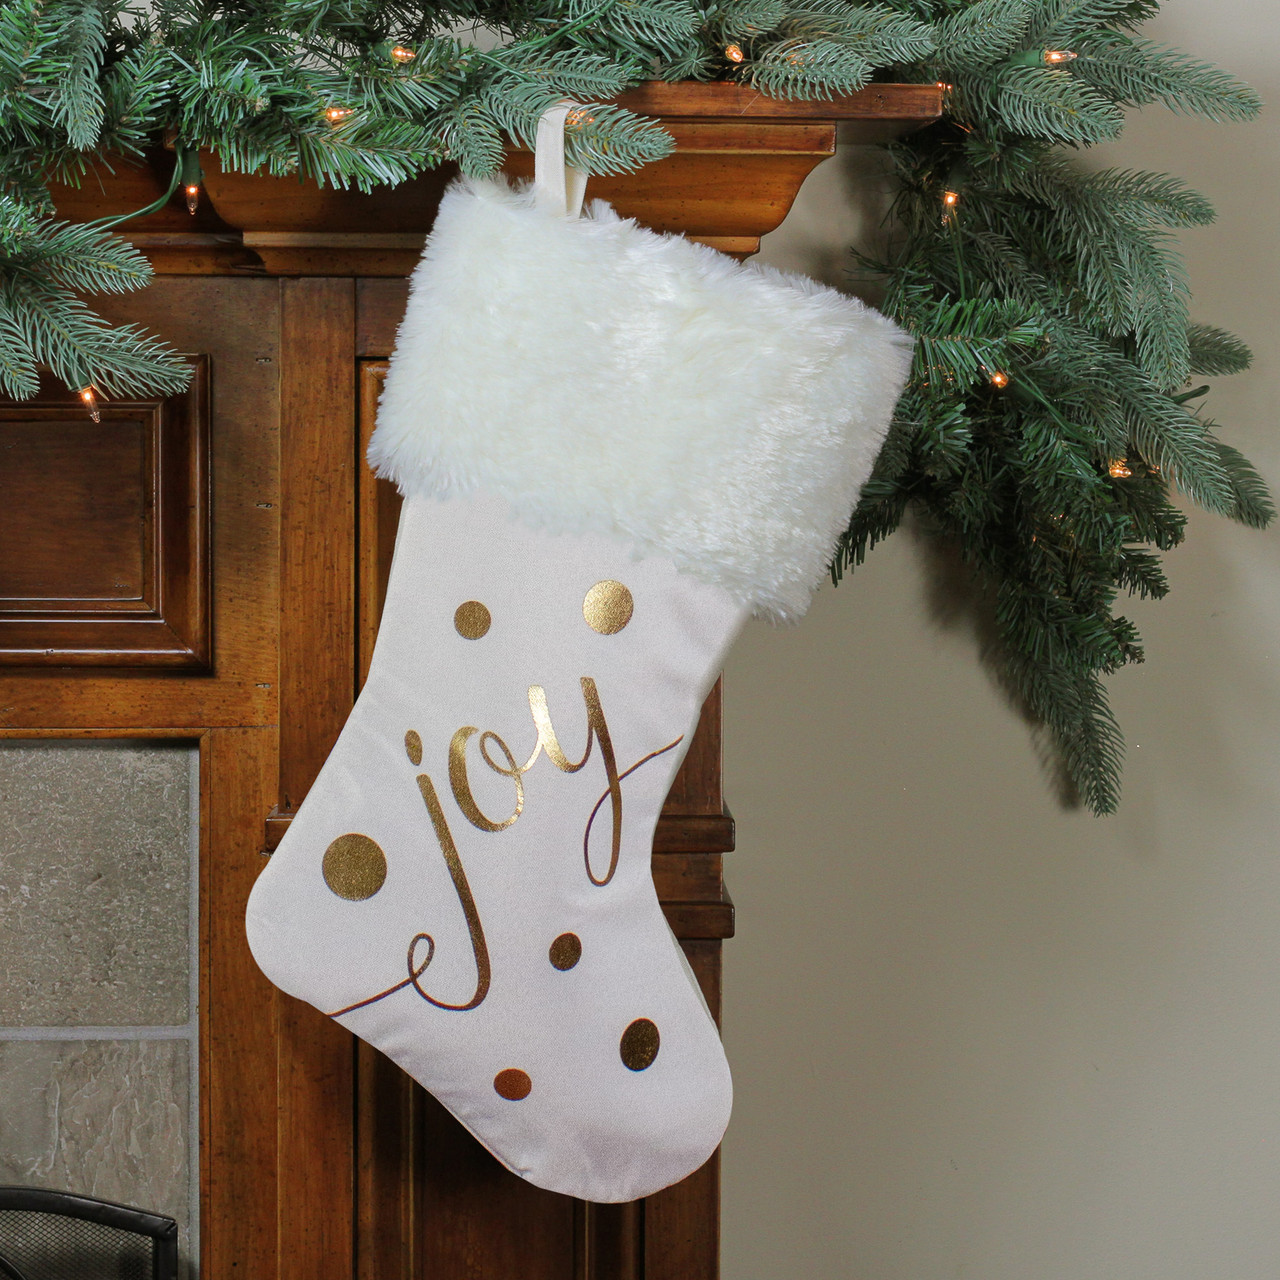 19” Ivory White Gold Foil “Joy” Christmas Stocking with White Faux Fur ...